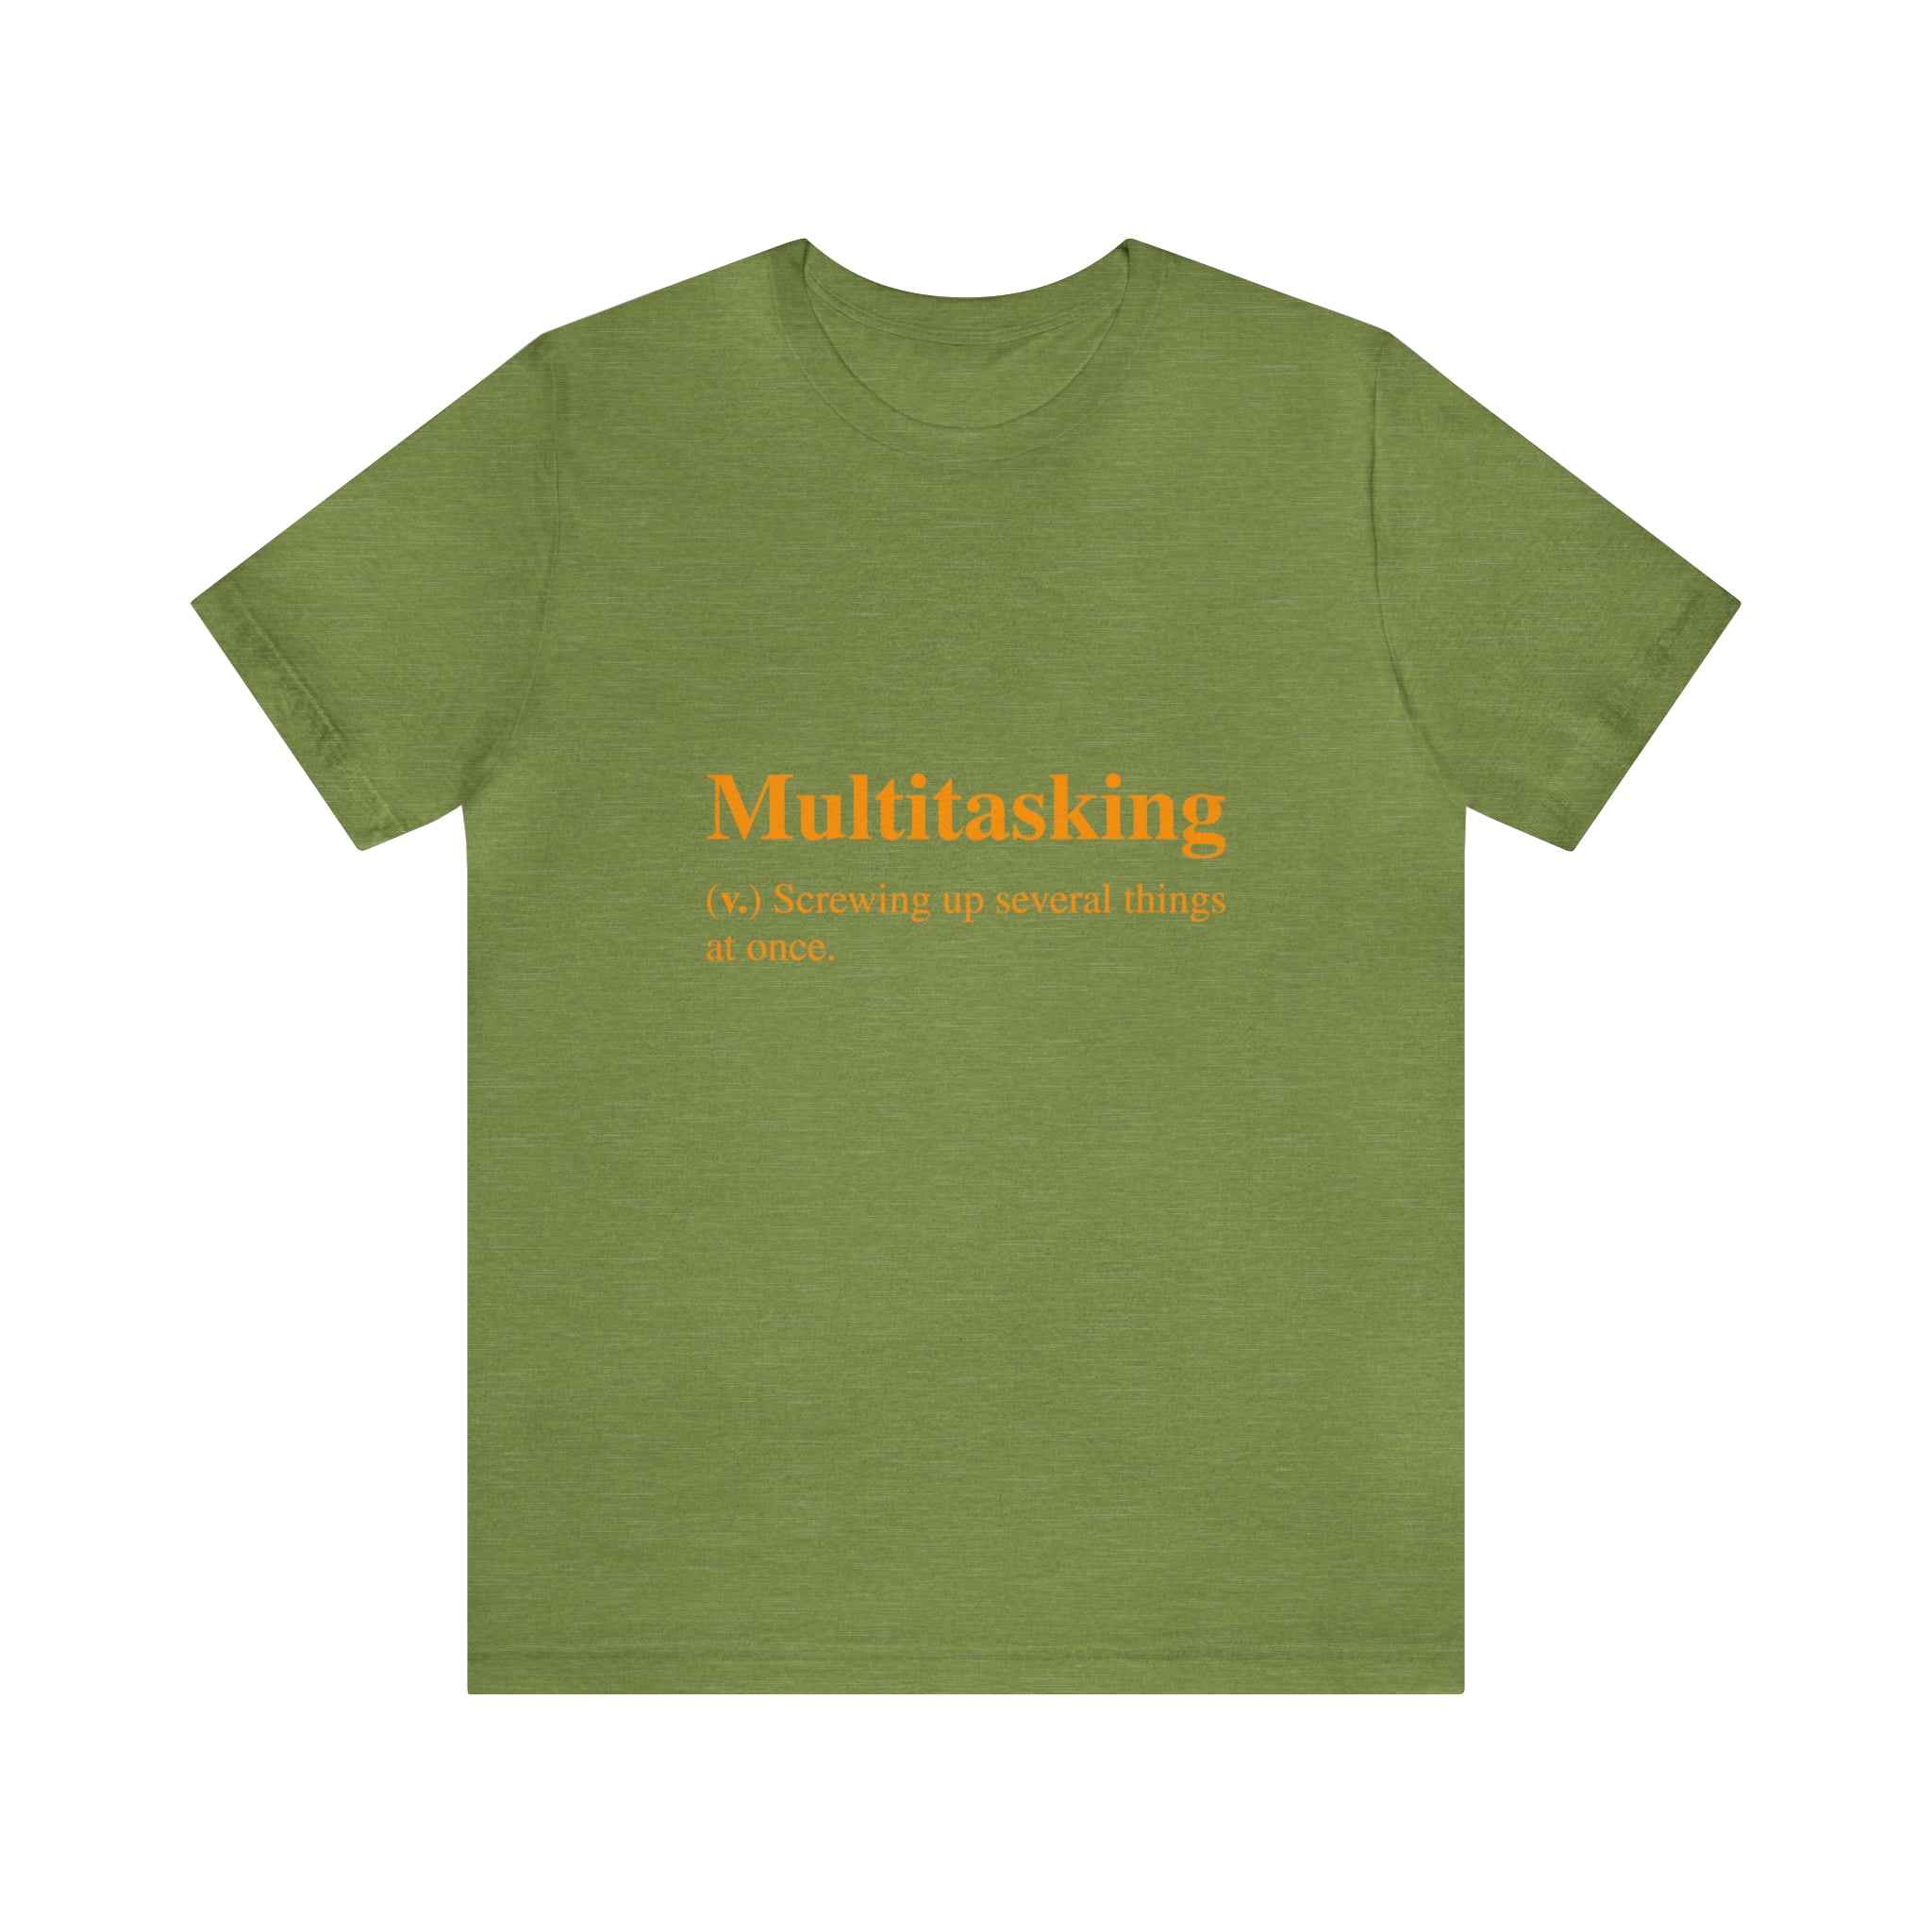 A fashionable Multitasking T-Shirt.